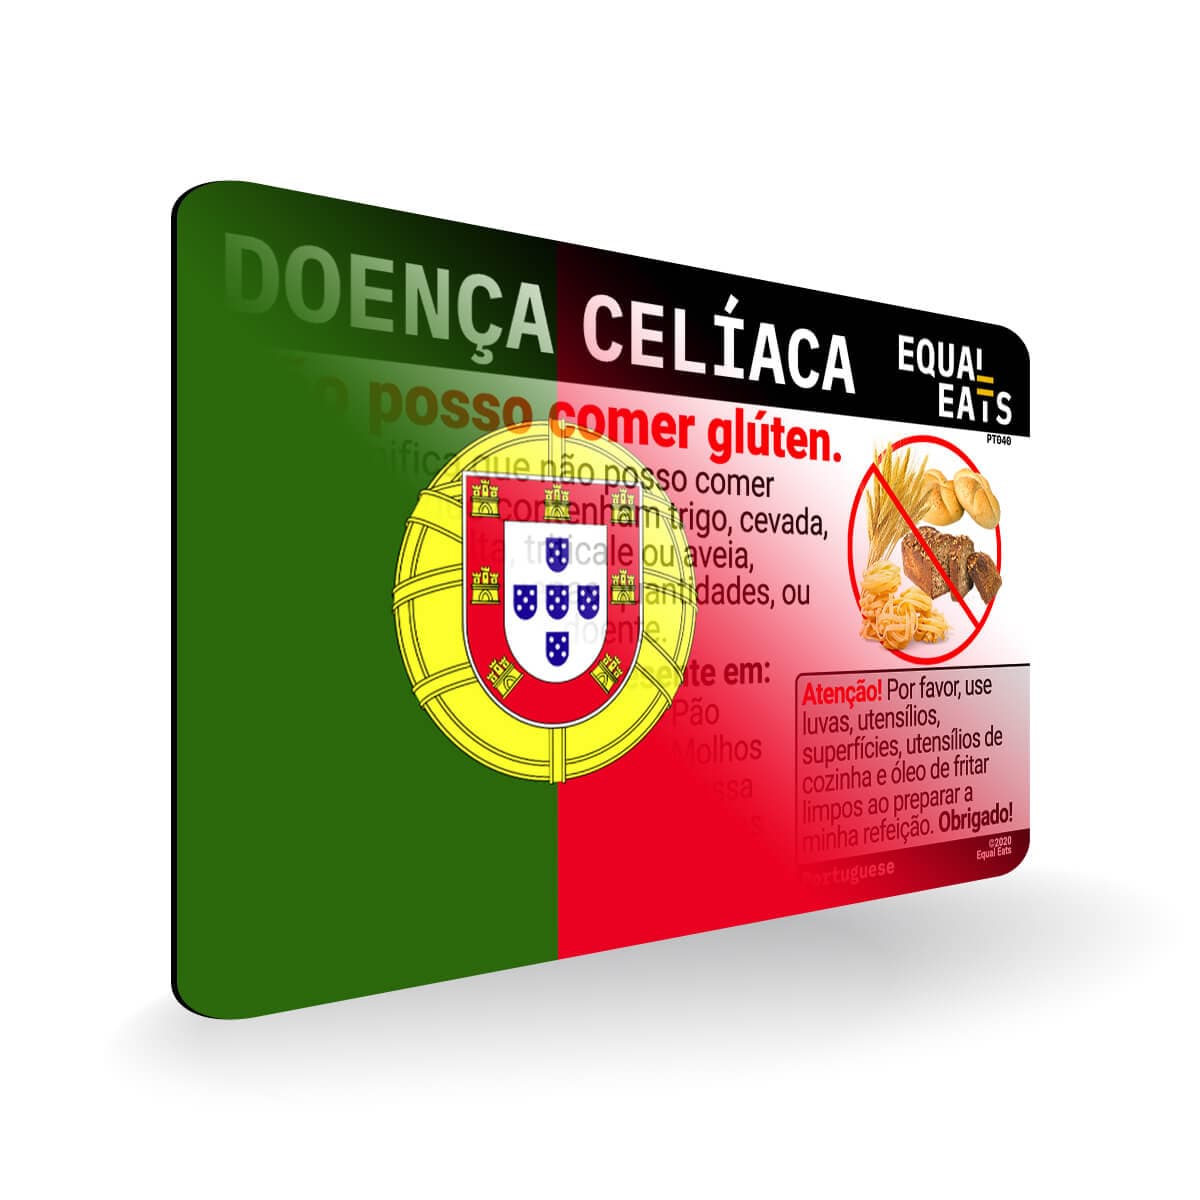 Portugal Celiac Card Gluten Free Travel In Portuguese Equal Eats